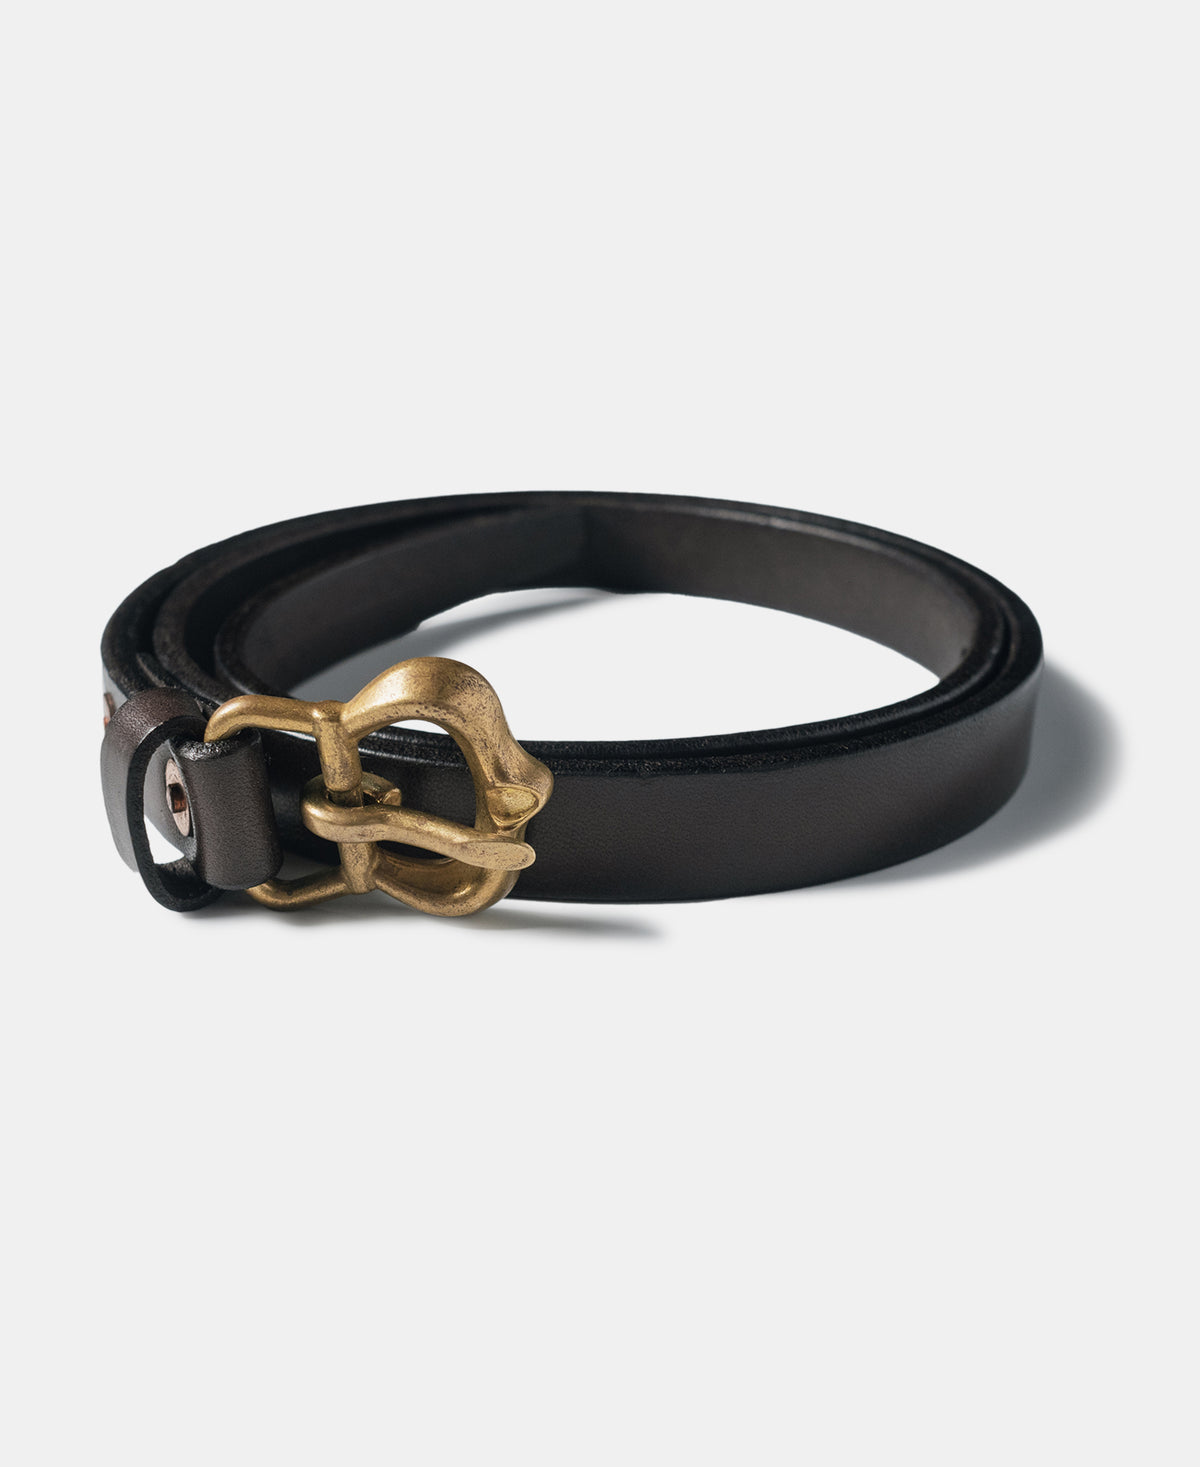 Brass Buckle Cowhide Belt - Brown